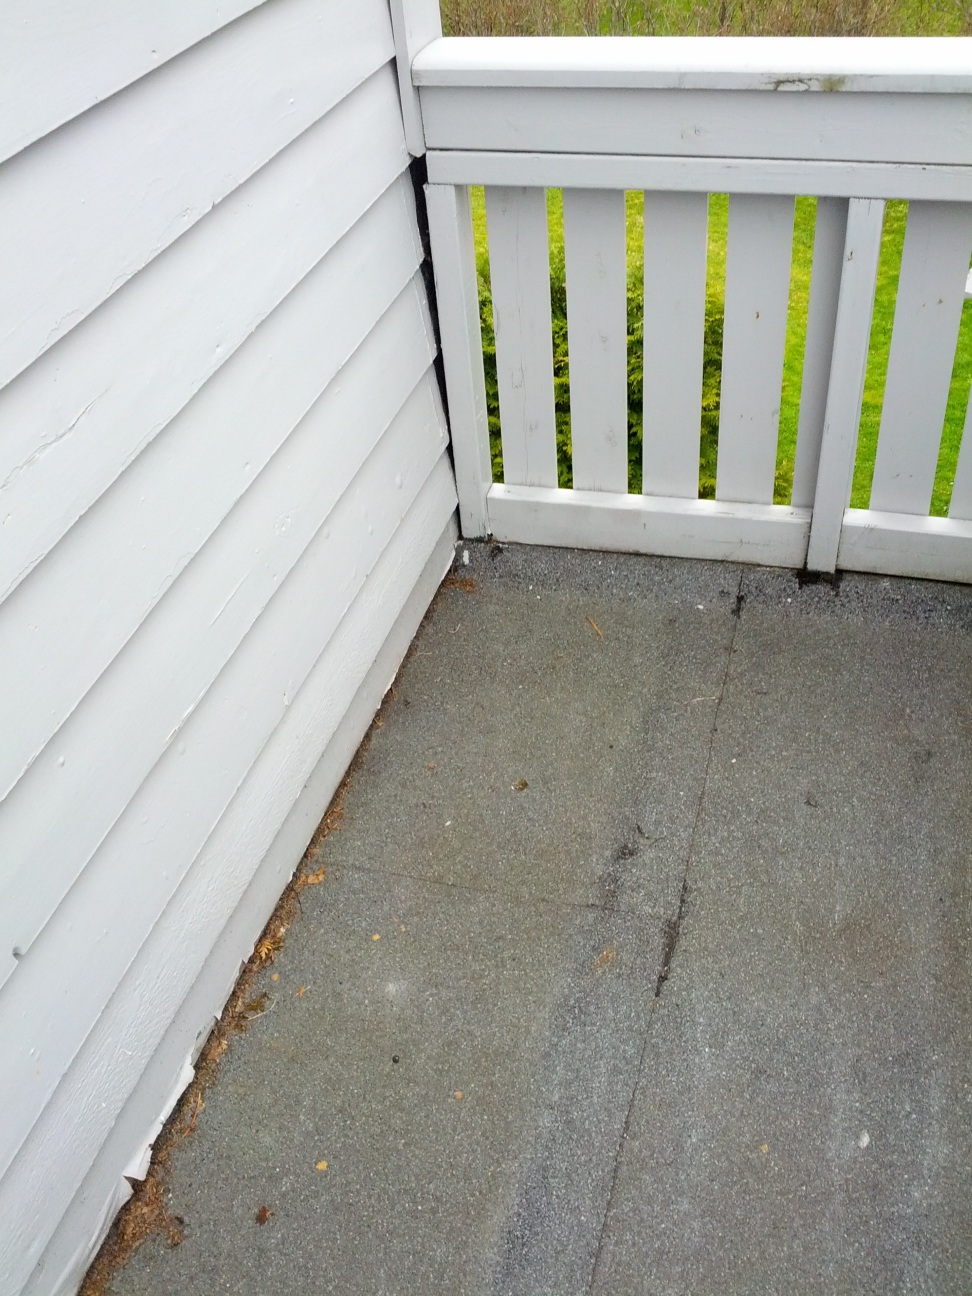 Lekk veranda, over entré til nabo. - 2012-05-08 18.59.24.jpg - andersoyvind